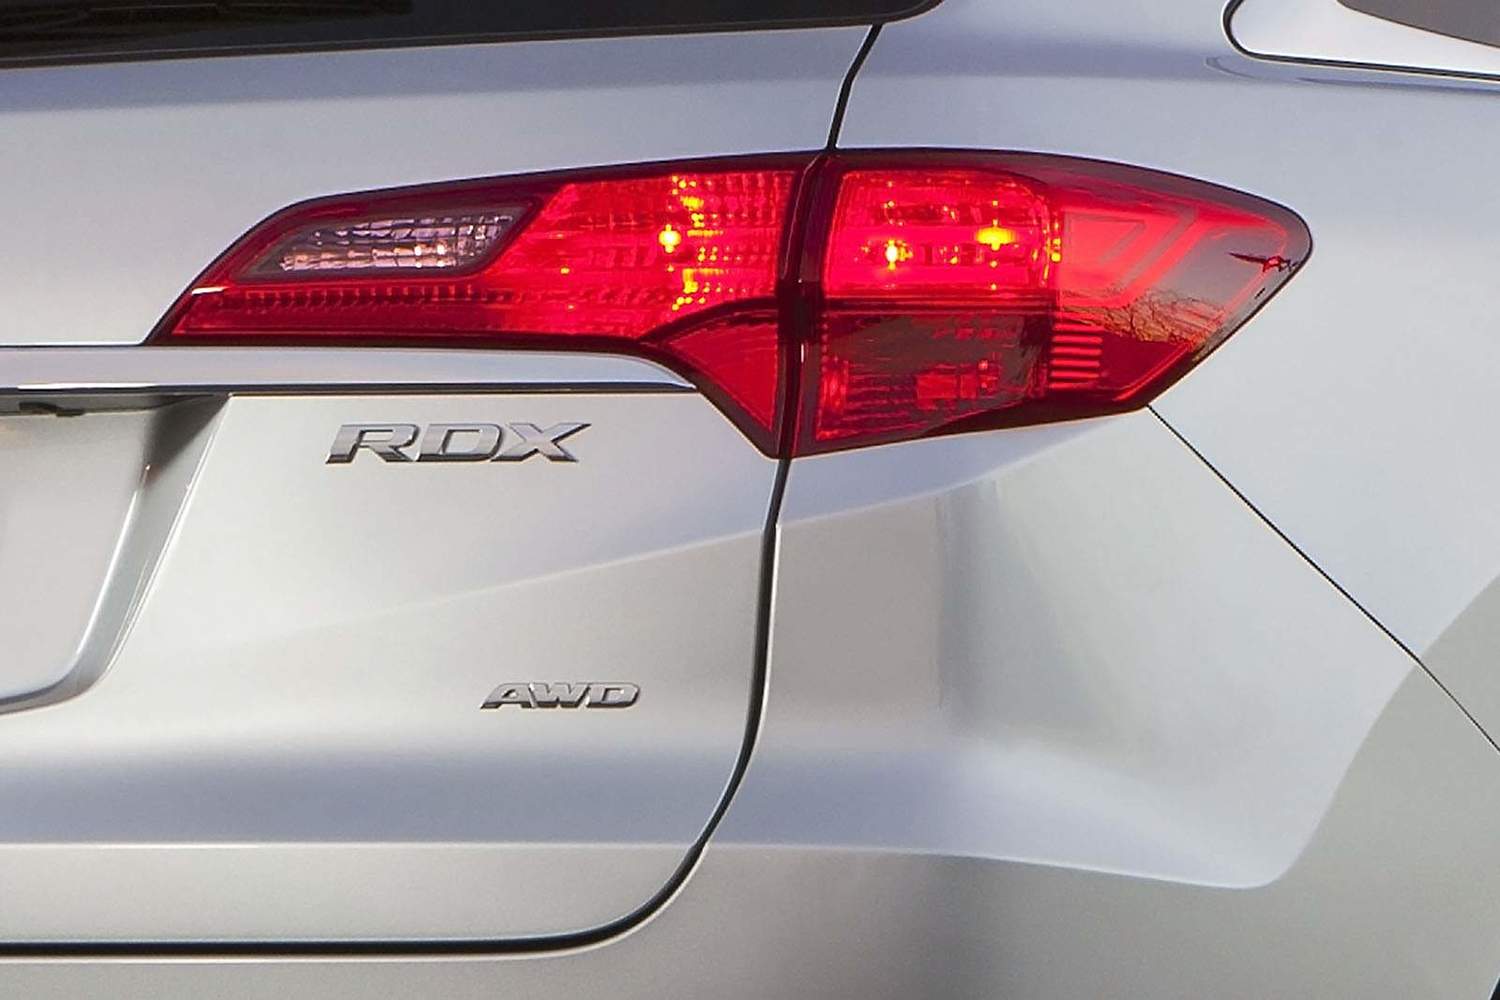 Acura RDX 4dr SUV Rear Badge (2014 model year shown)